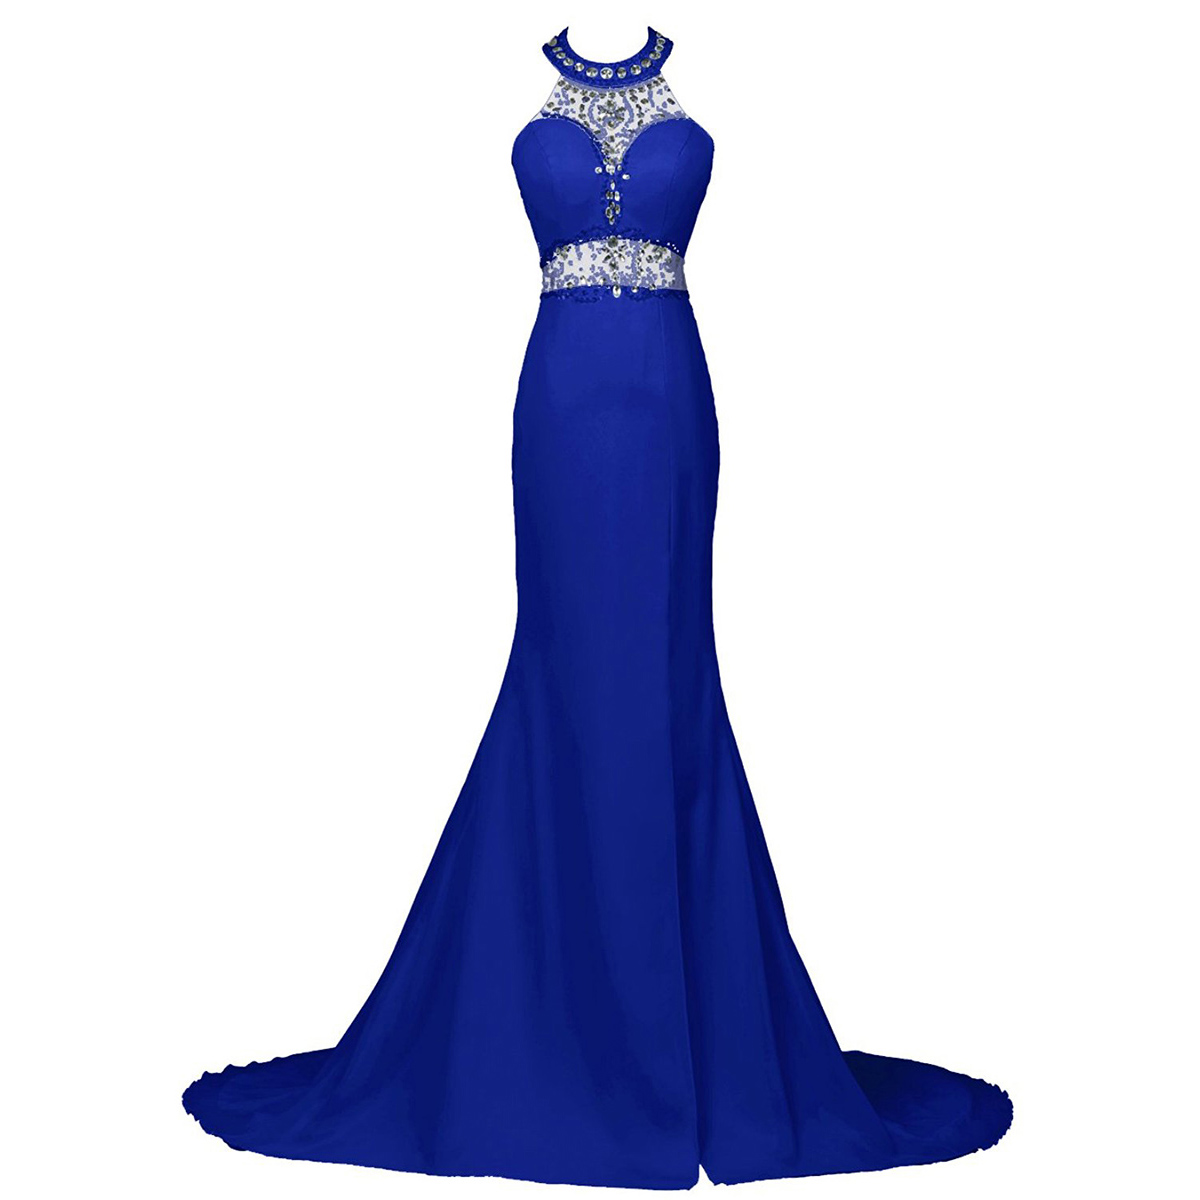 Royal Blue Floor Length Chiffon Trumpet Prom Dress Featuring Beaded